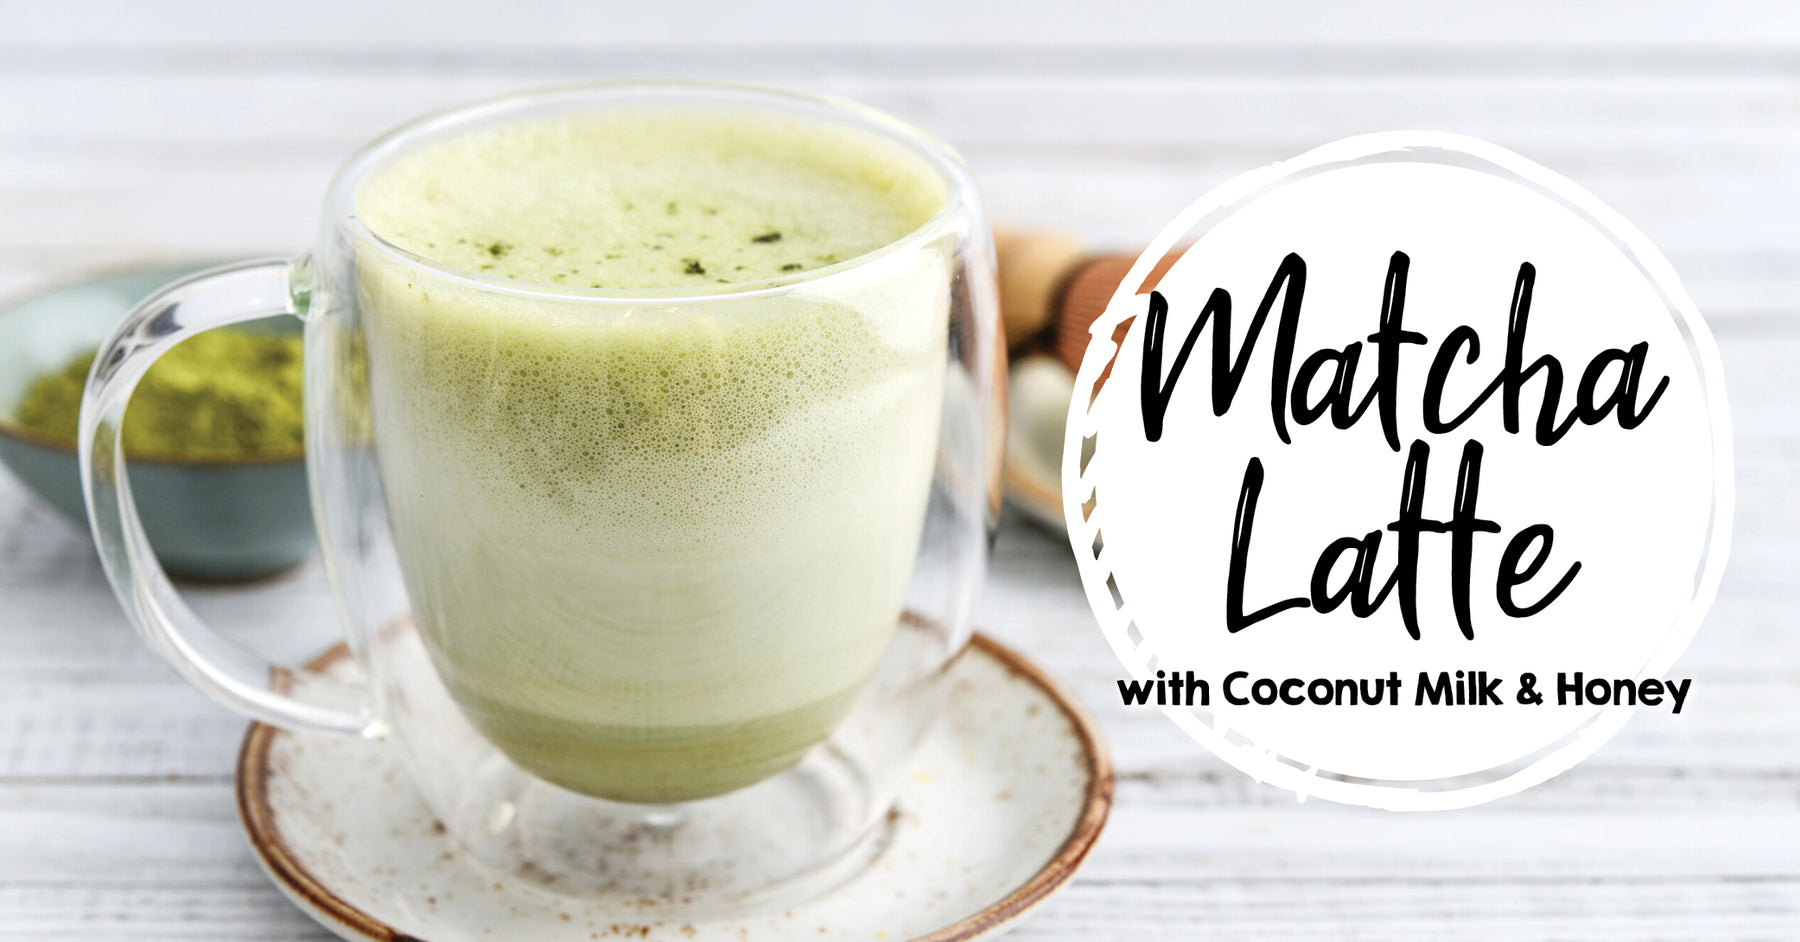 Matcha Green Tea Latte with Coconut Milk & Honey